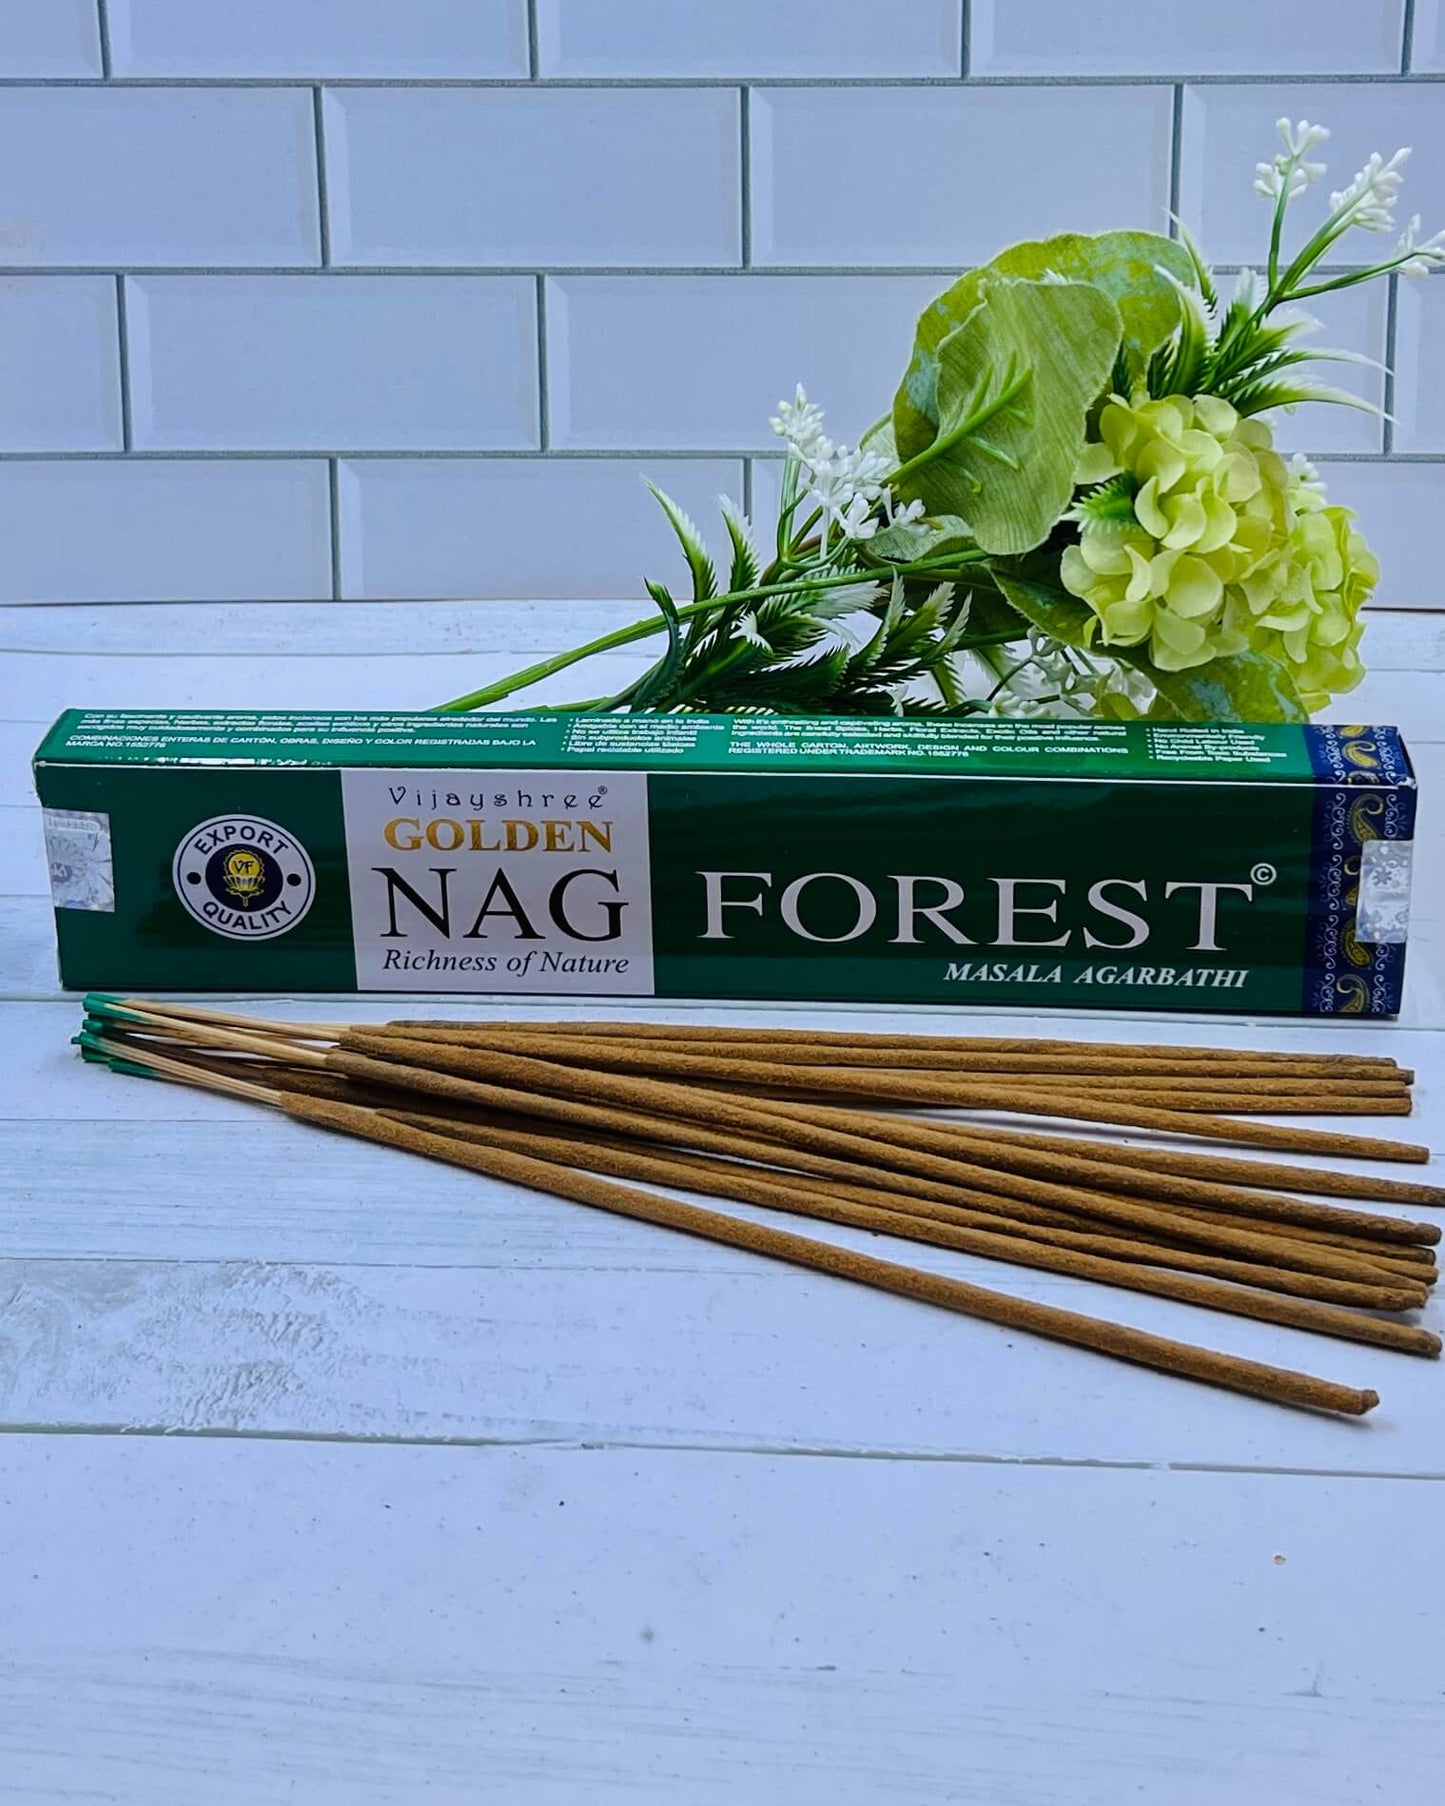 Vijayshree Golden Nag Forest incense